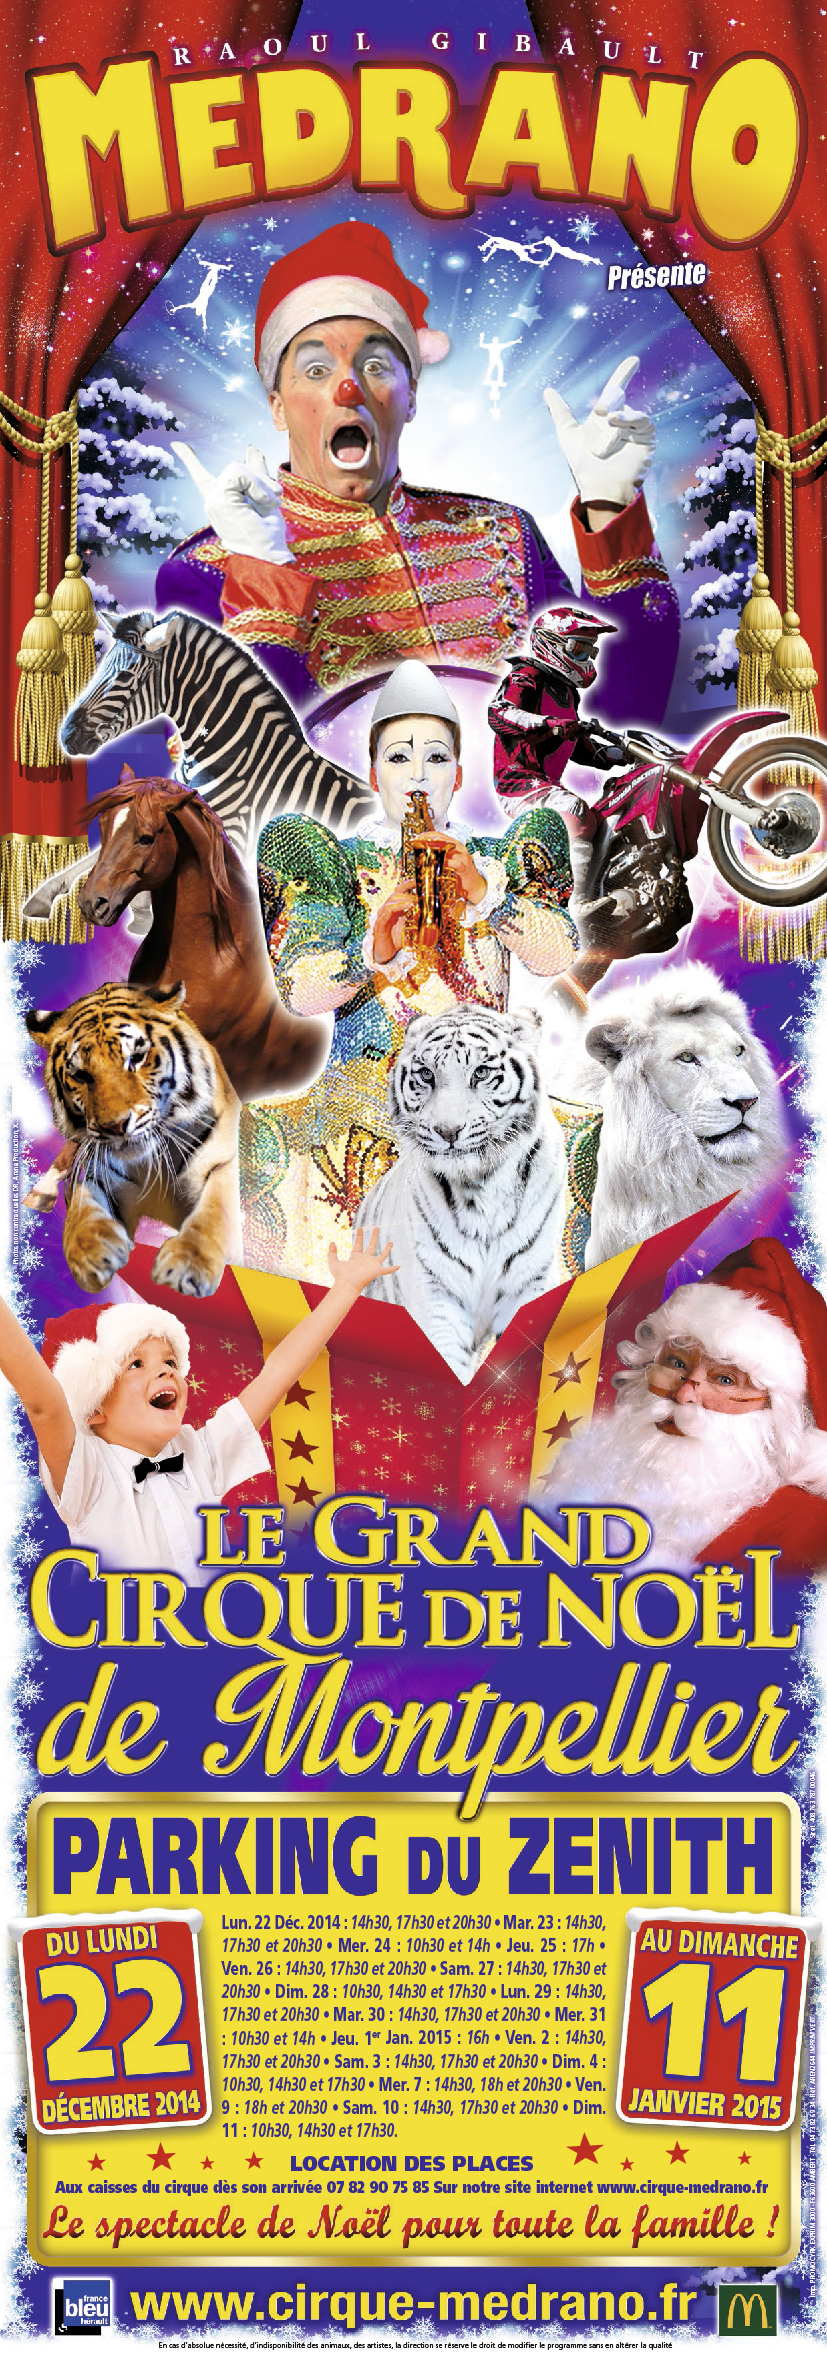 affichette magasin de cirque affiche vitrine de cirque poster 21x60 cirque medrano festival du cirque promocyrk promocirk promocirque ok